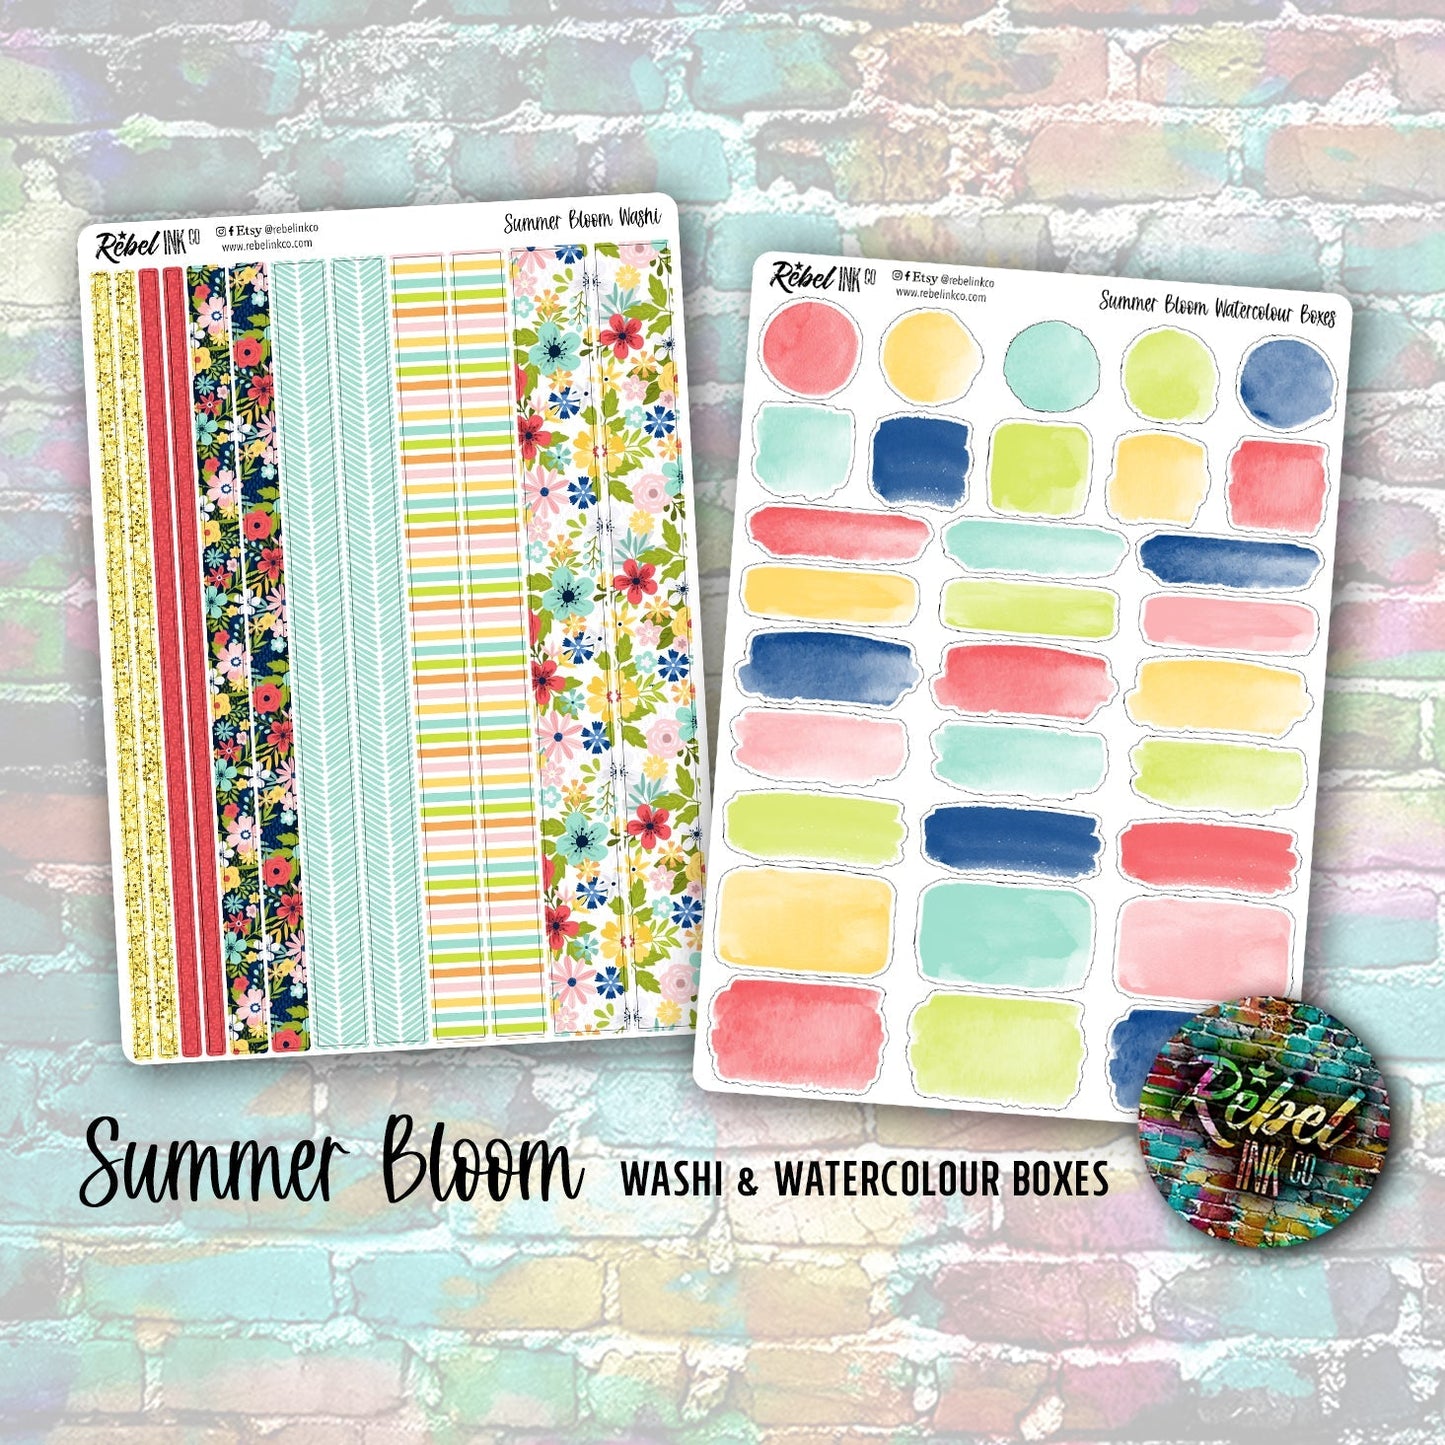 Summer Bloom - Washi & Watercolour Boxes